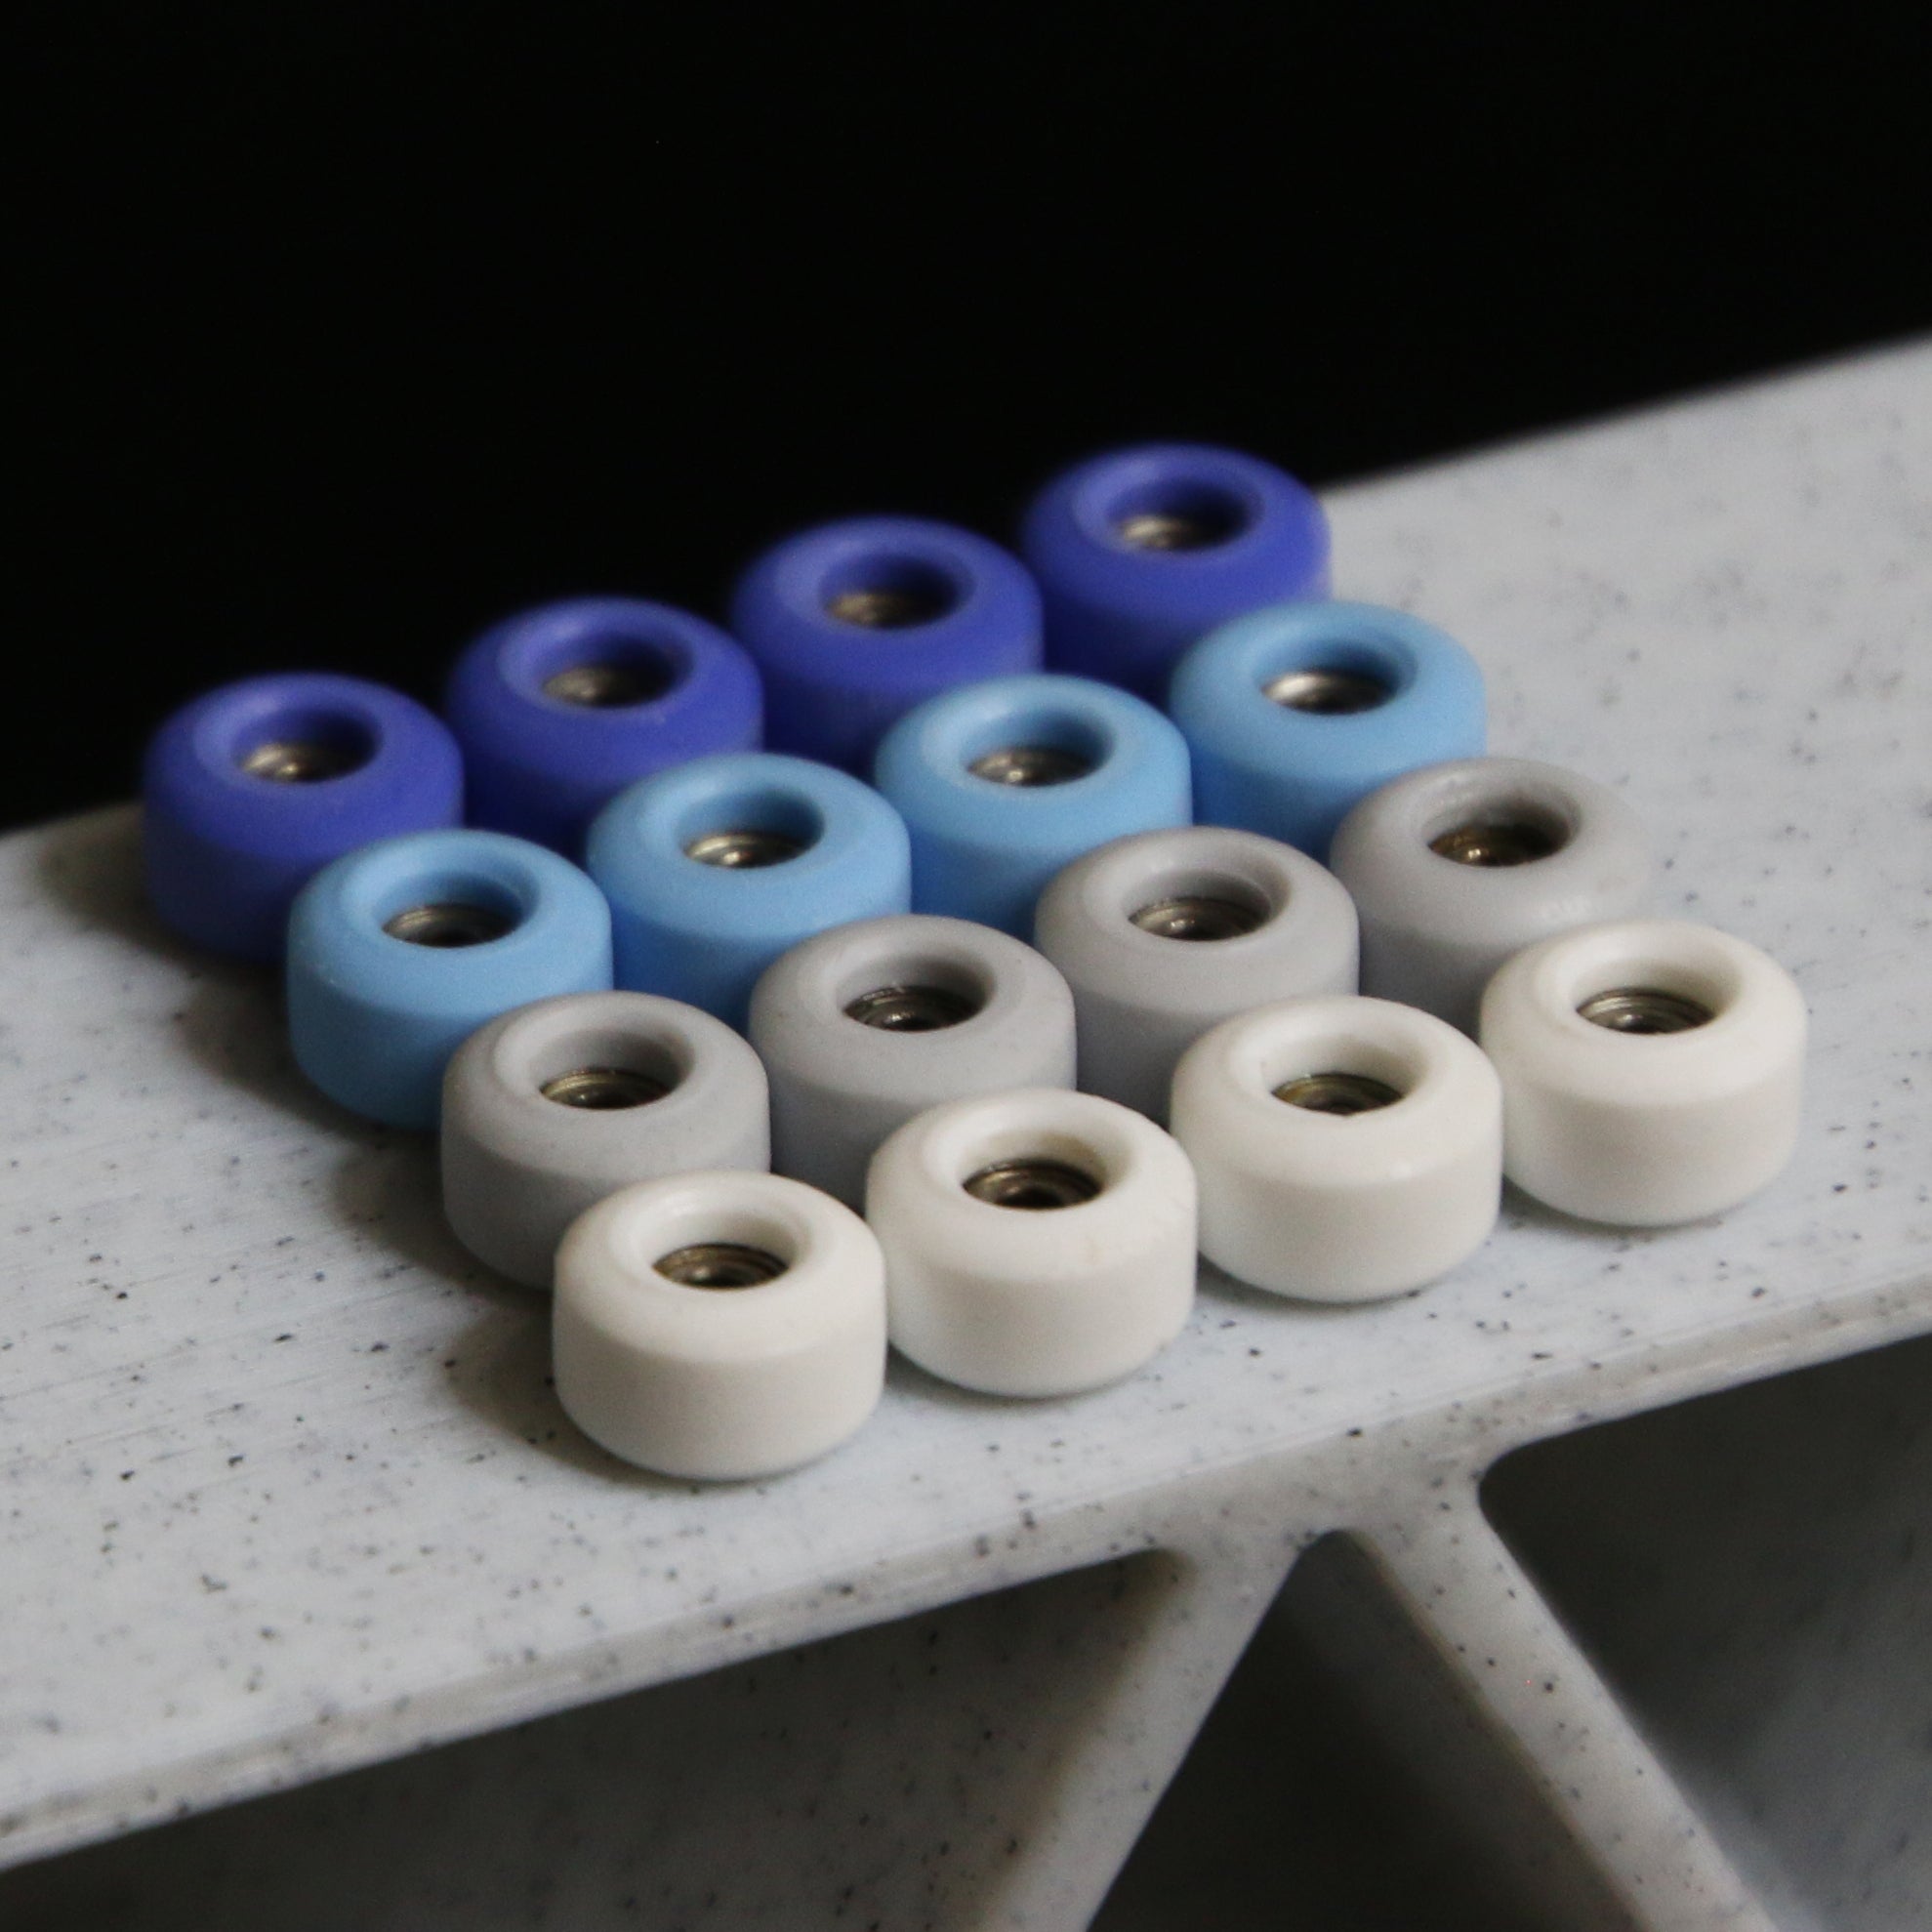 Dark Blue Wysocki Wheels Collaboration - Premium Urethane Fingerboard Wheels (101A Durometer)